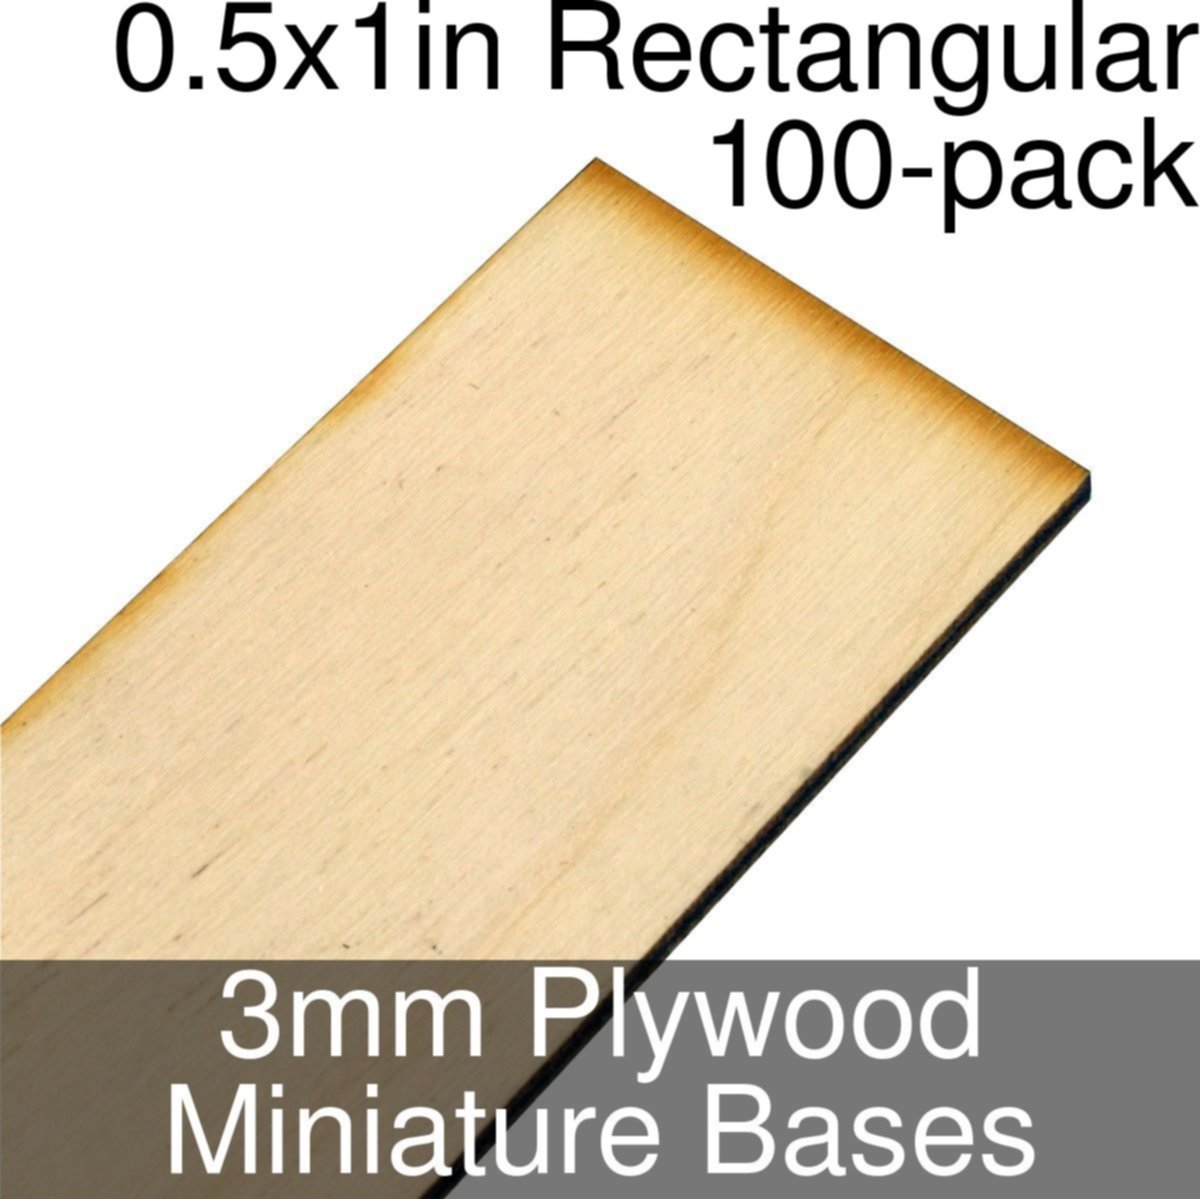 0.5x1-inch rectangular miniature bases